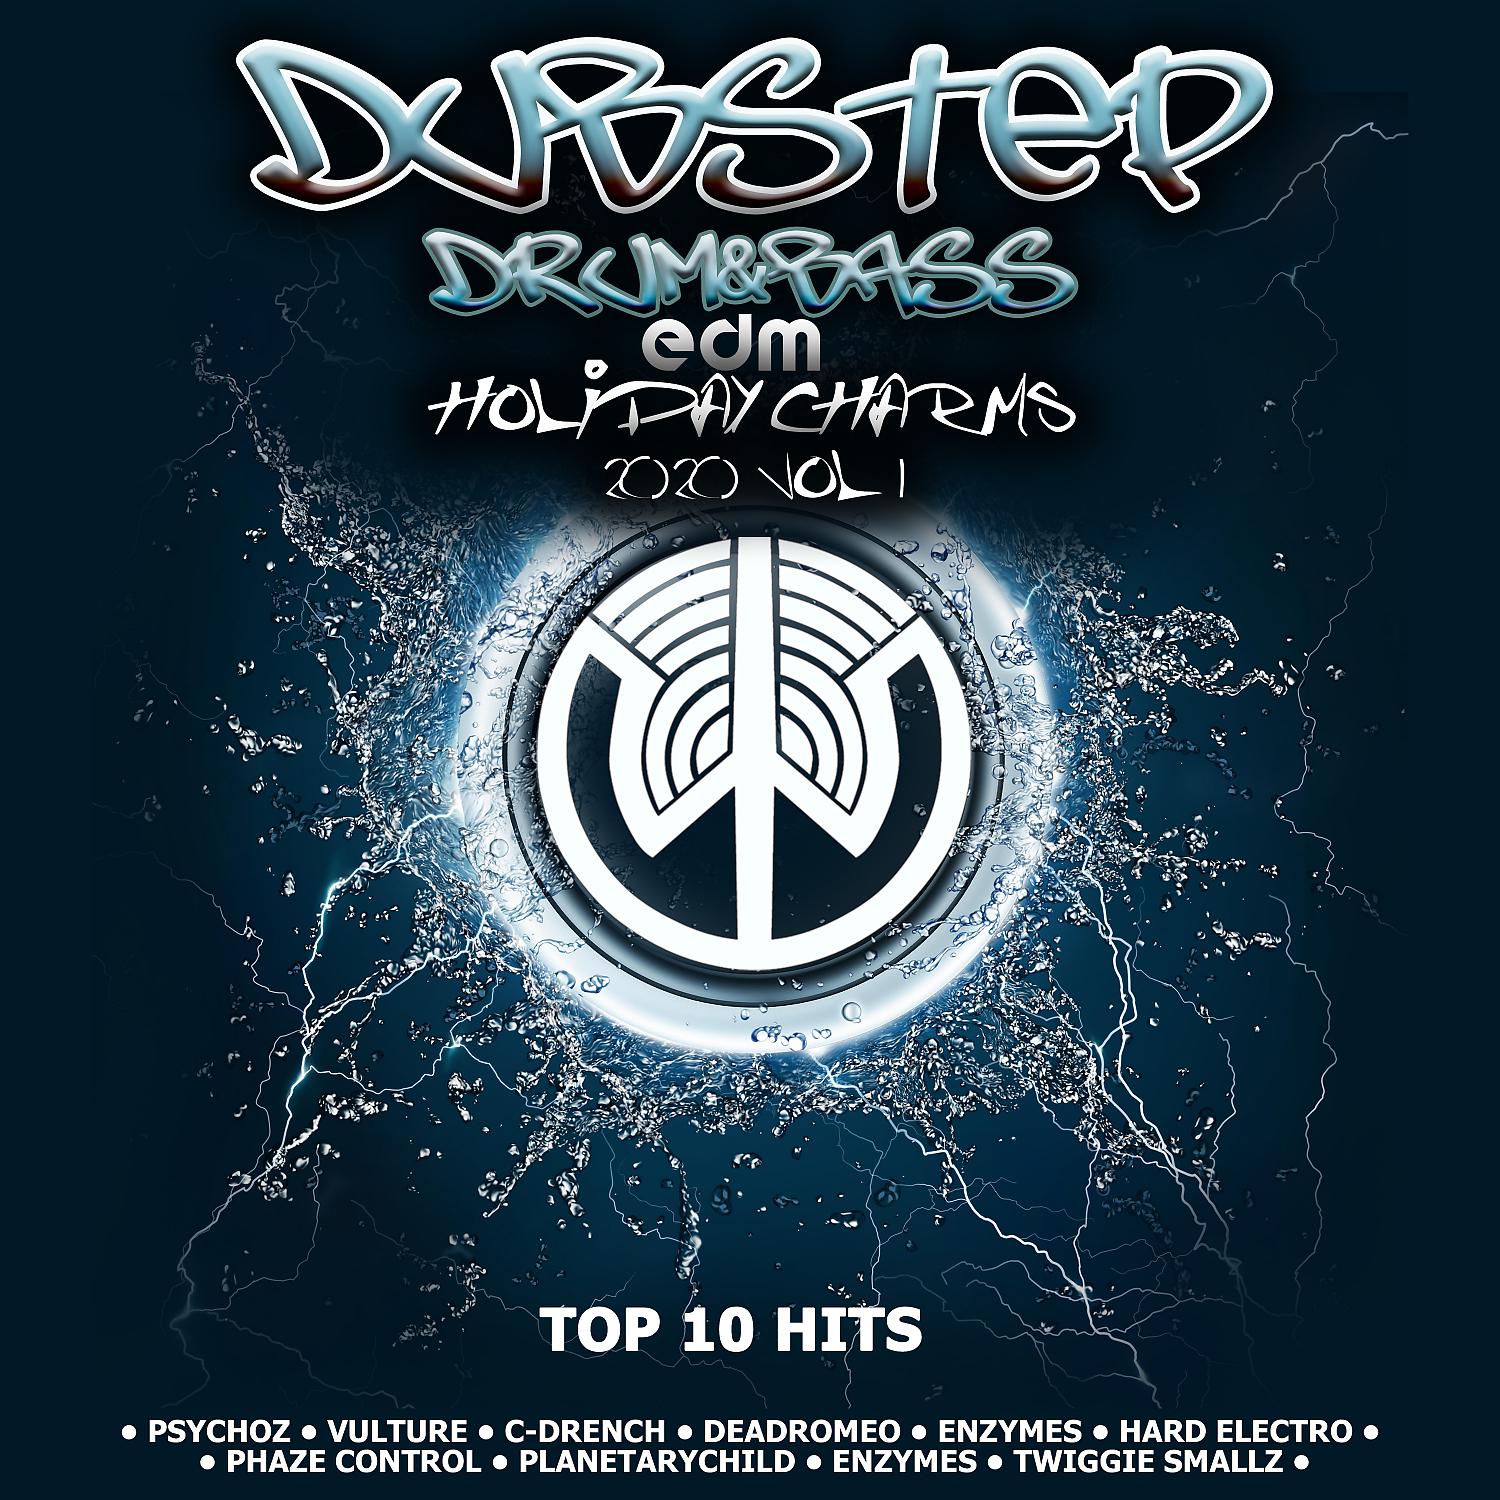 Постер альбома Dubstep Drum & Bass EDM Holiday Charms 2020 Top 10 Hits Wayside, Vol.1